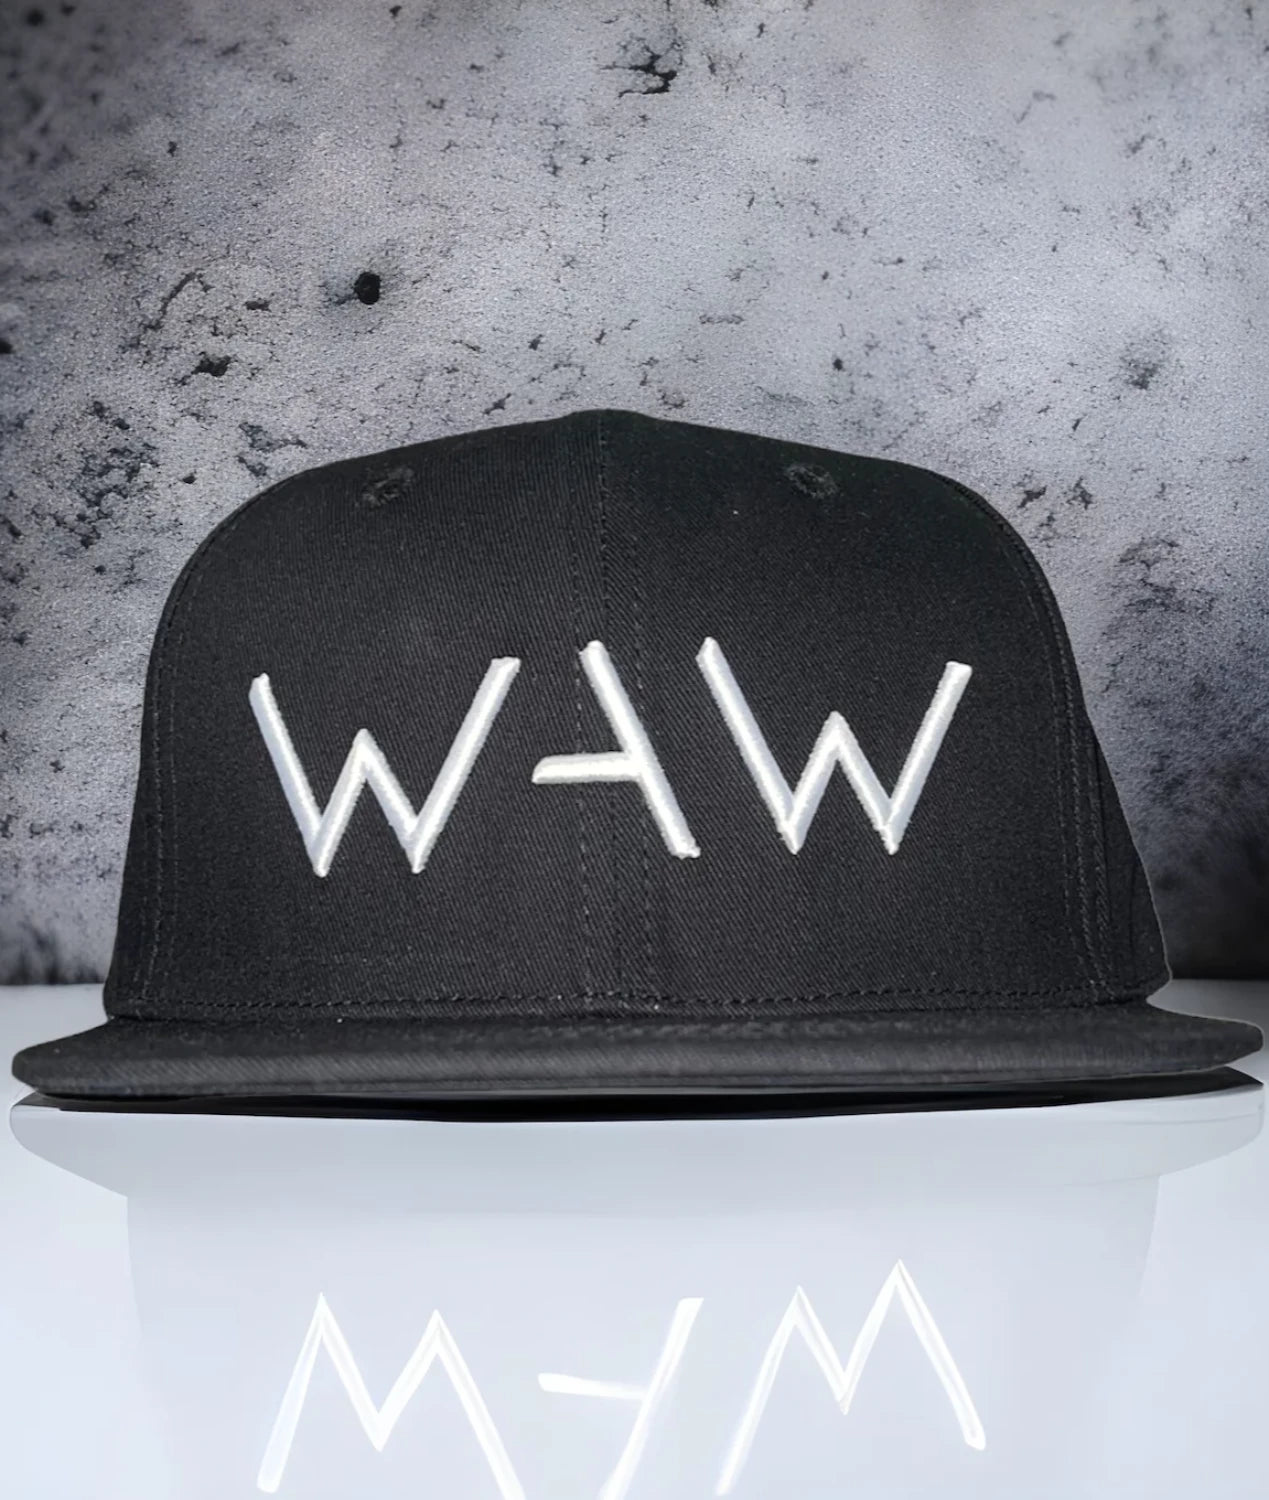 WAW SnapBack- Black and White